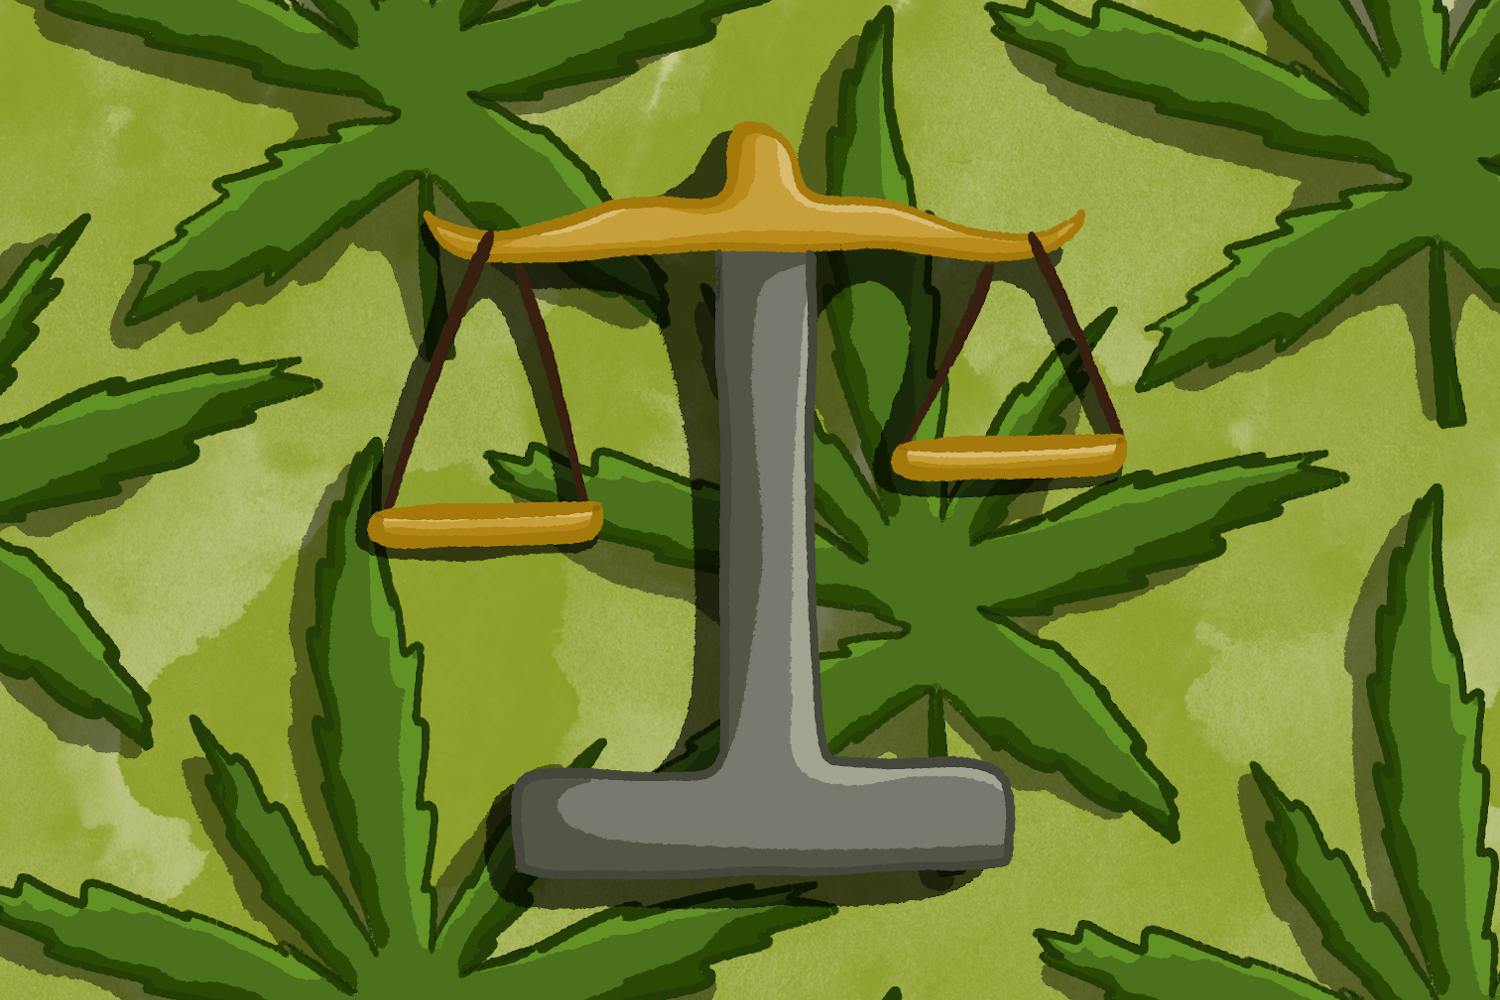 Morgan_Kubasko_928_community-cannabis-law-association.png